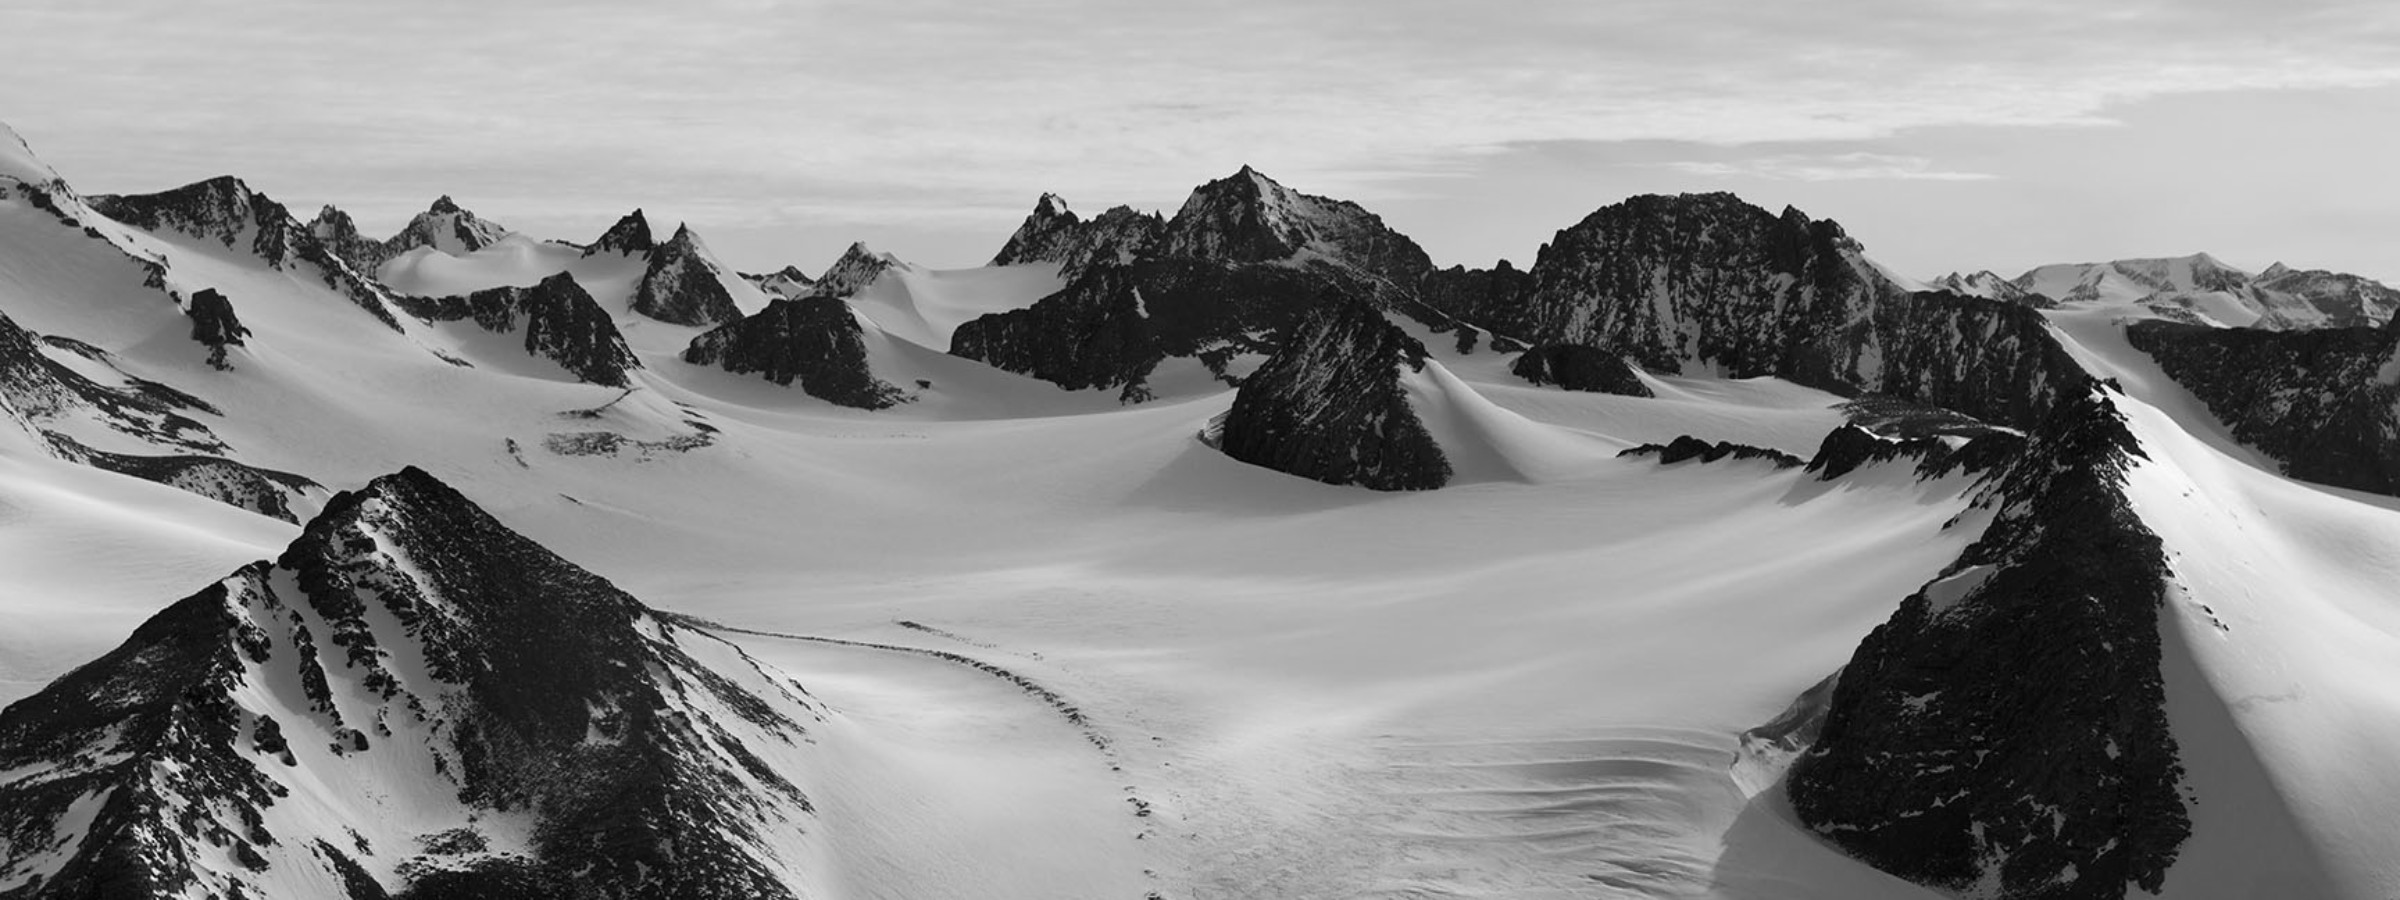 South Pole Documentation, 2015